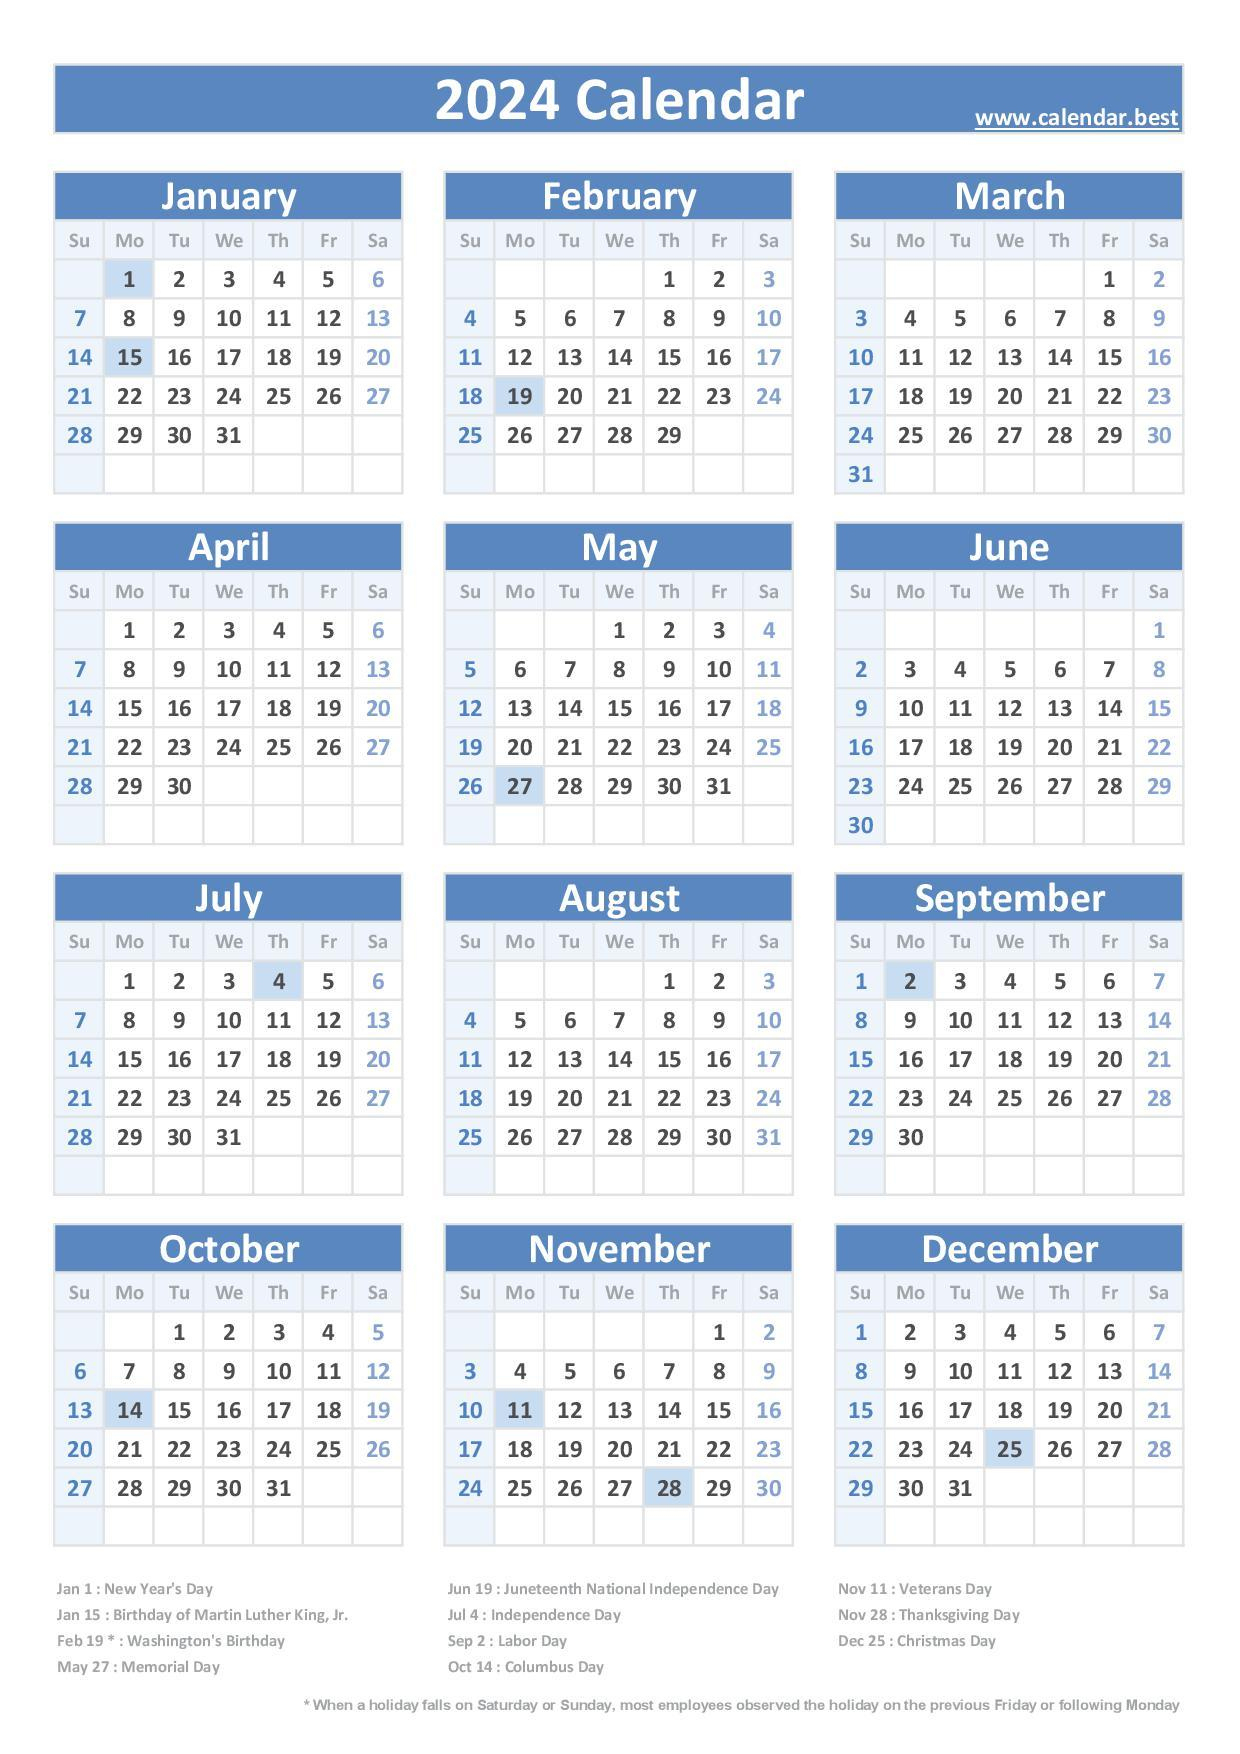 2024 Calendar With Holidays (Us Federal Holidays) | 2024 Printable Calendar One Page With Holidays Free Download